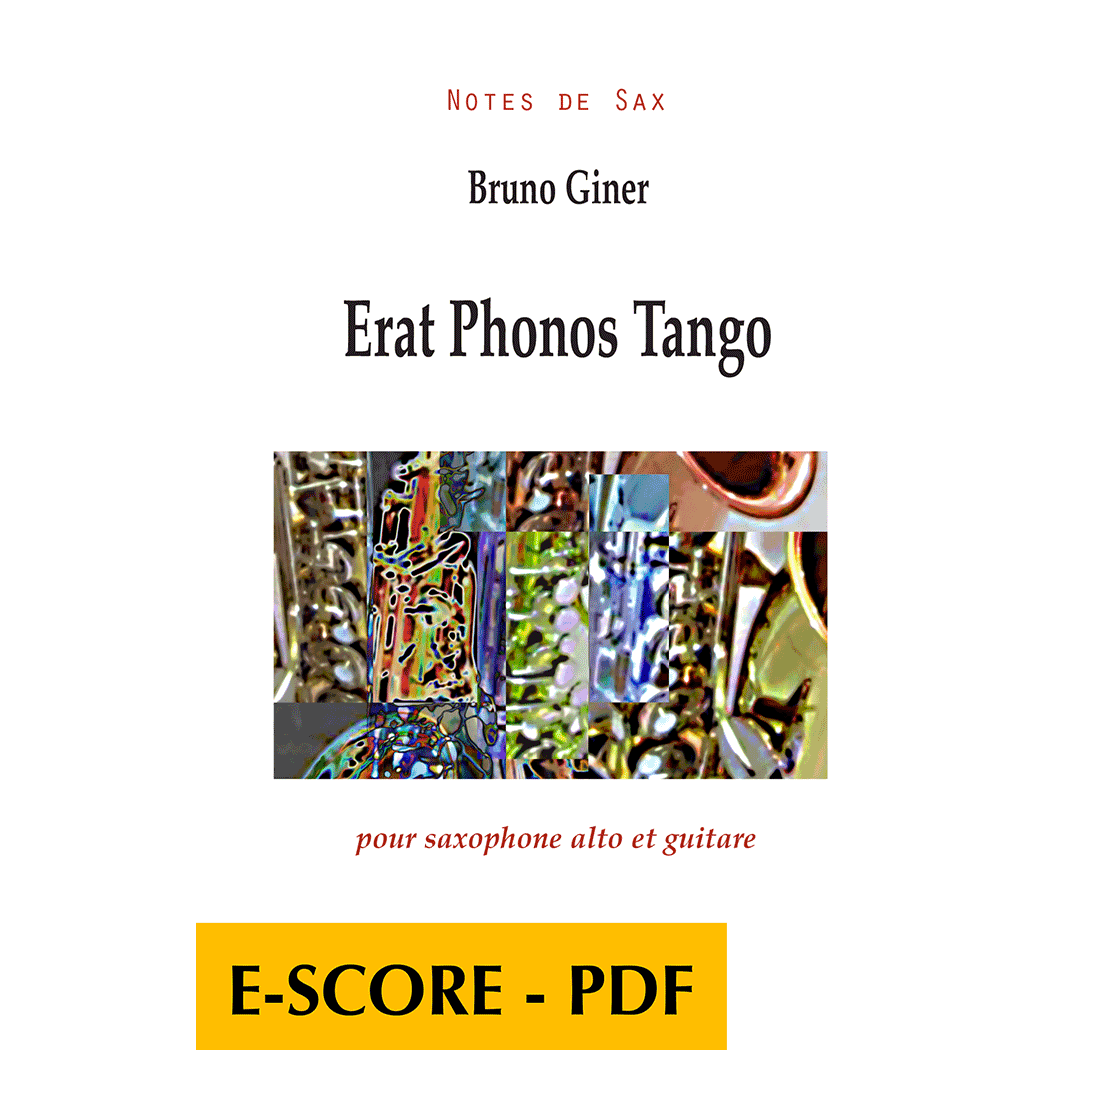 Erat Phonos Tango for alto saxophone and guitar - E-score PDF